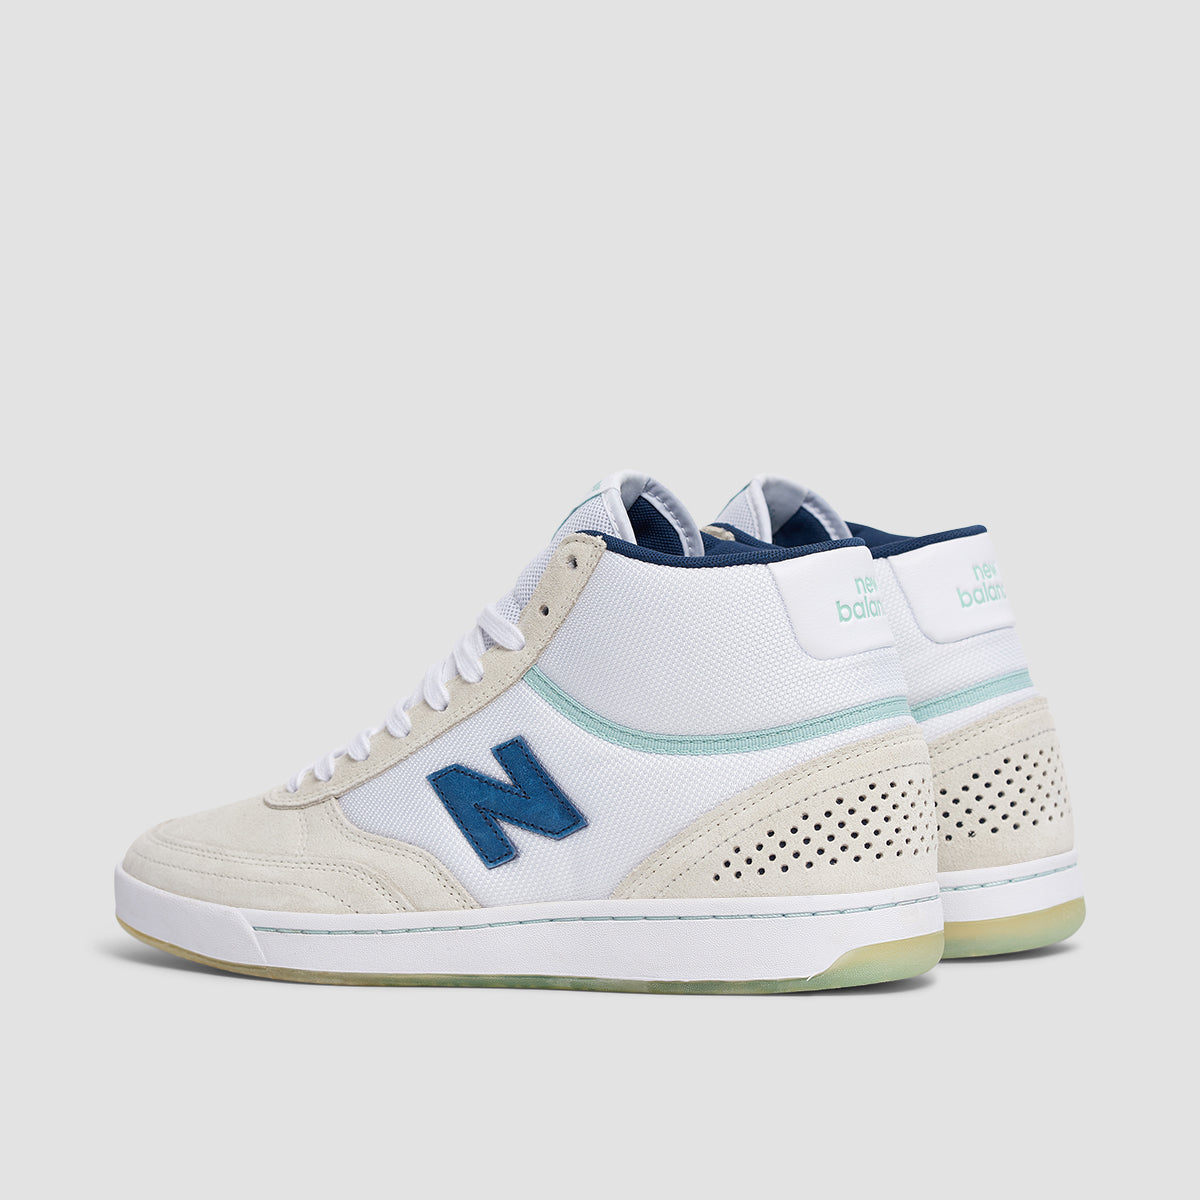 New Balance Numeric Tom Knox 440 High Shoes - White/Navy